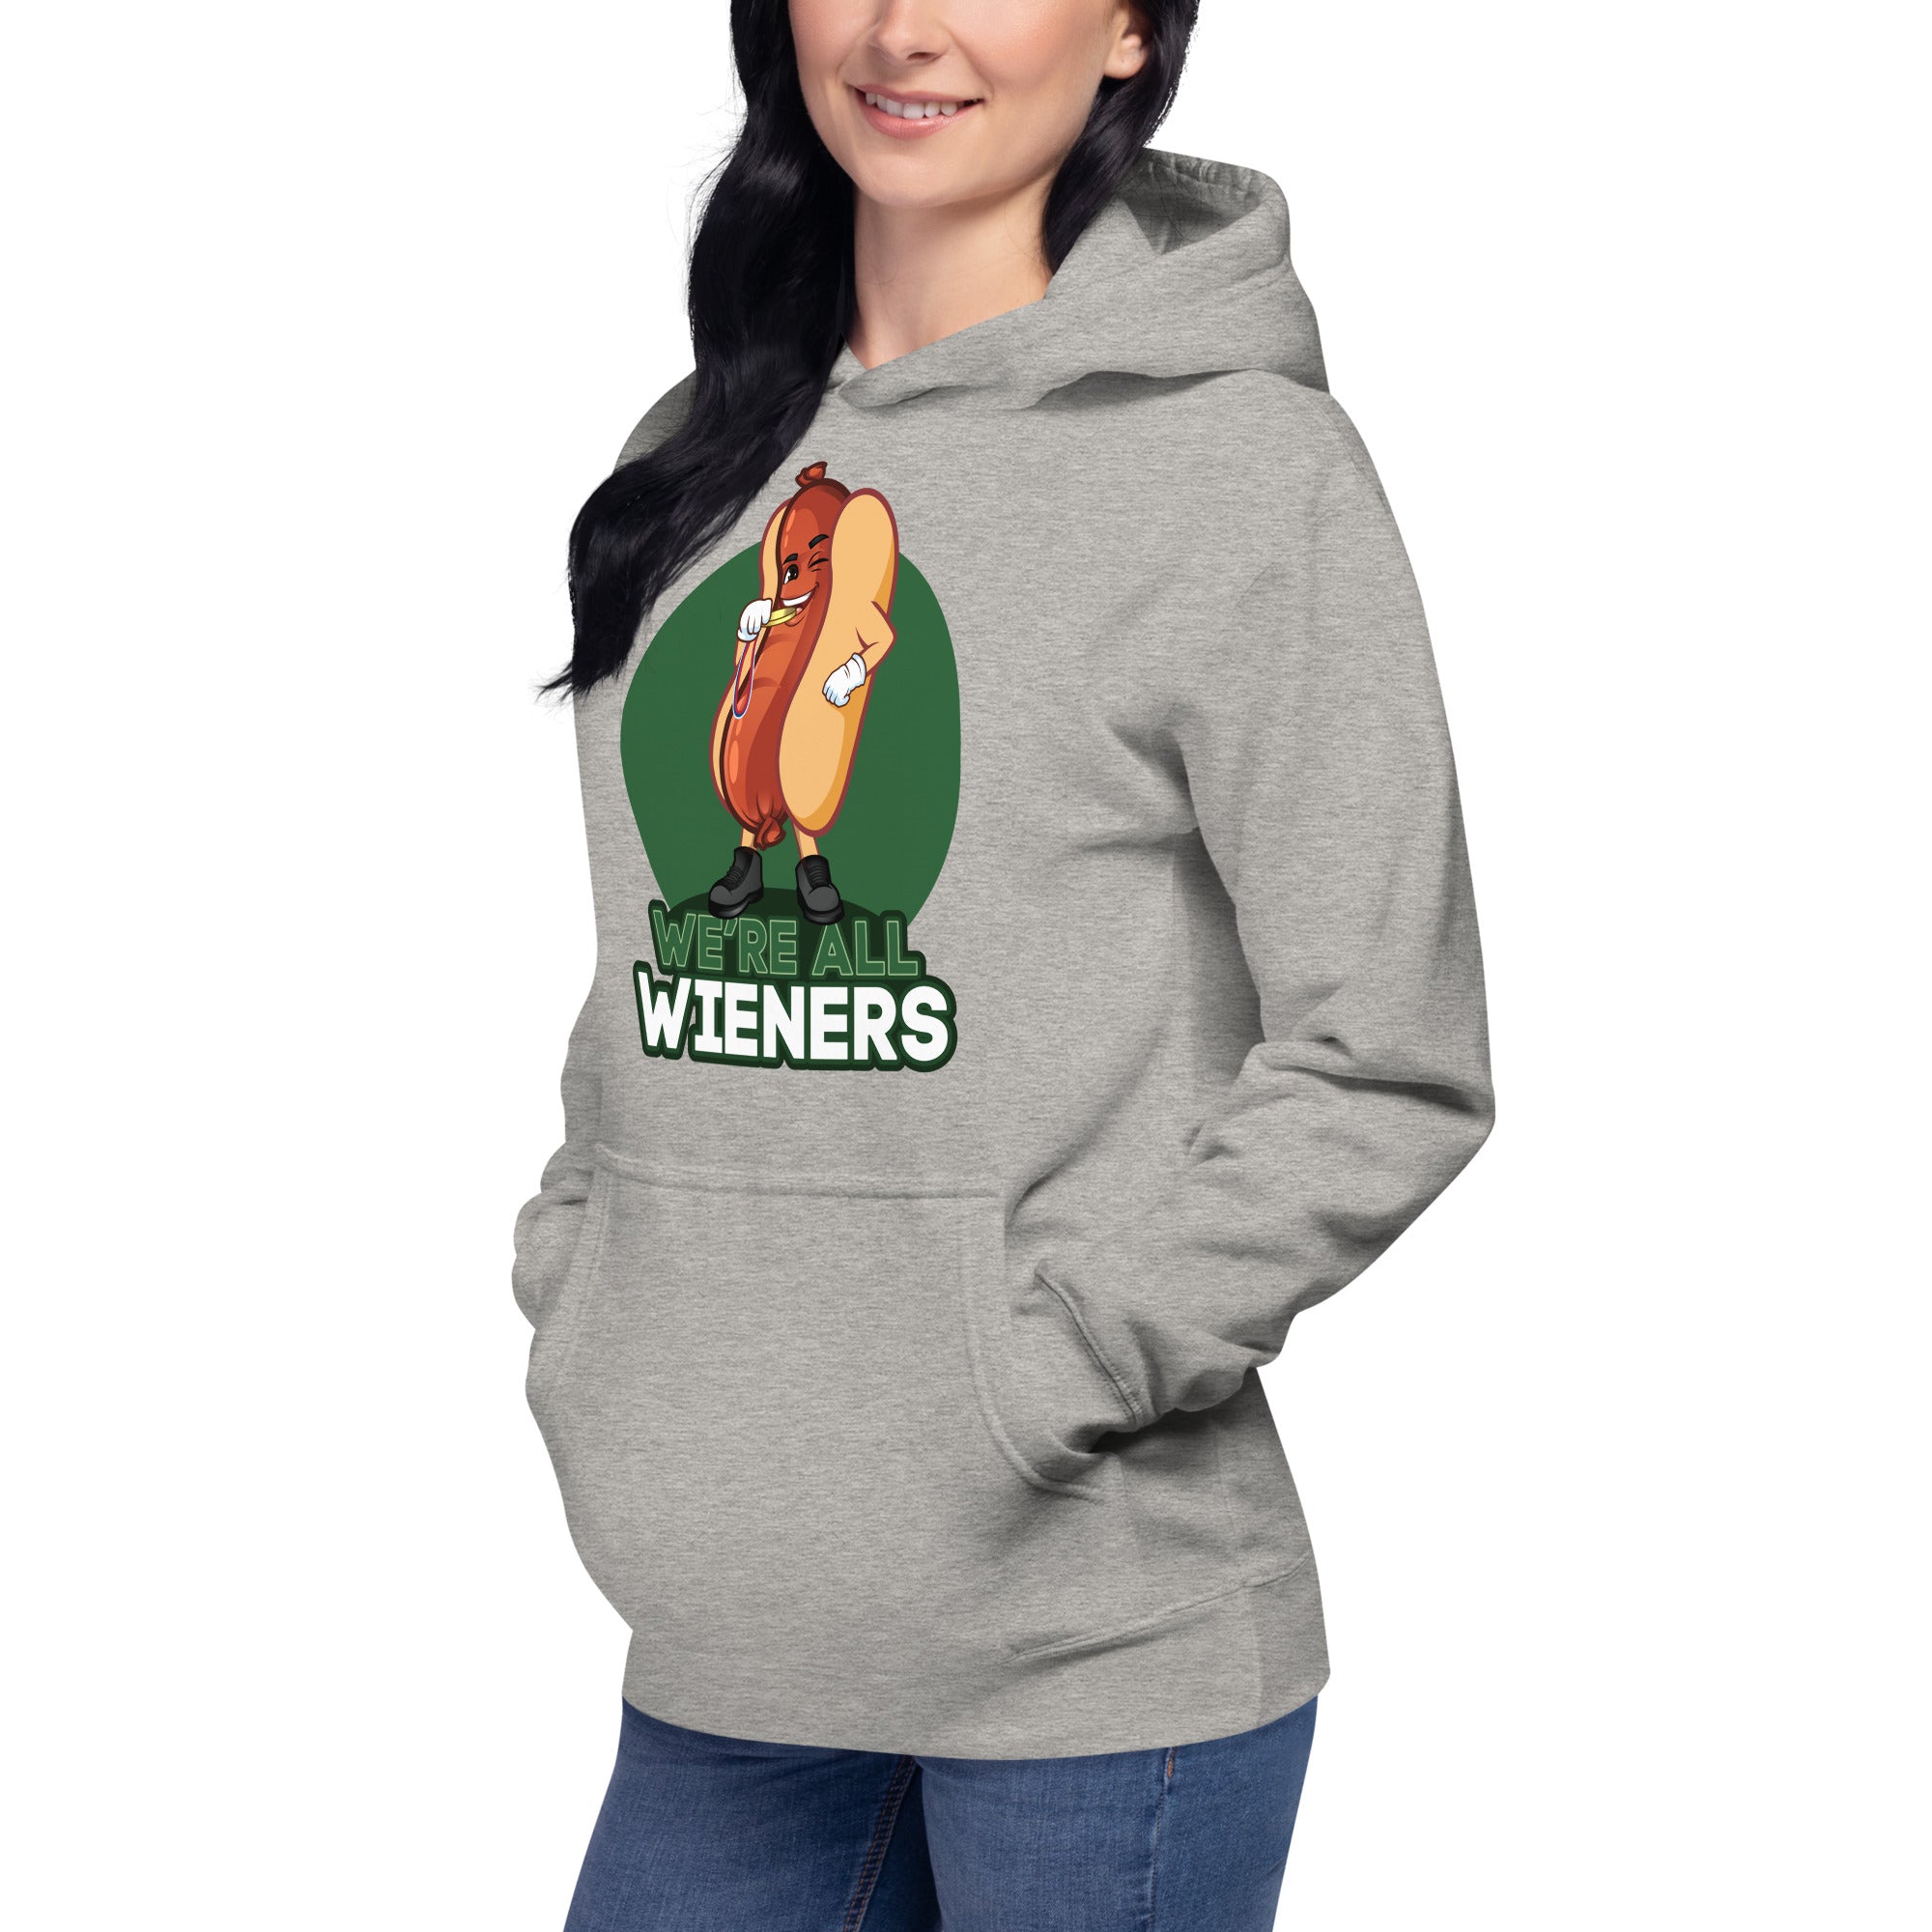 We're All Wieners Original Women's Heavy Hoodie - Green